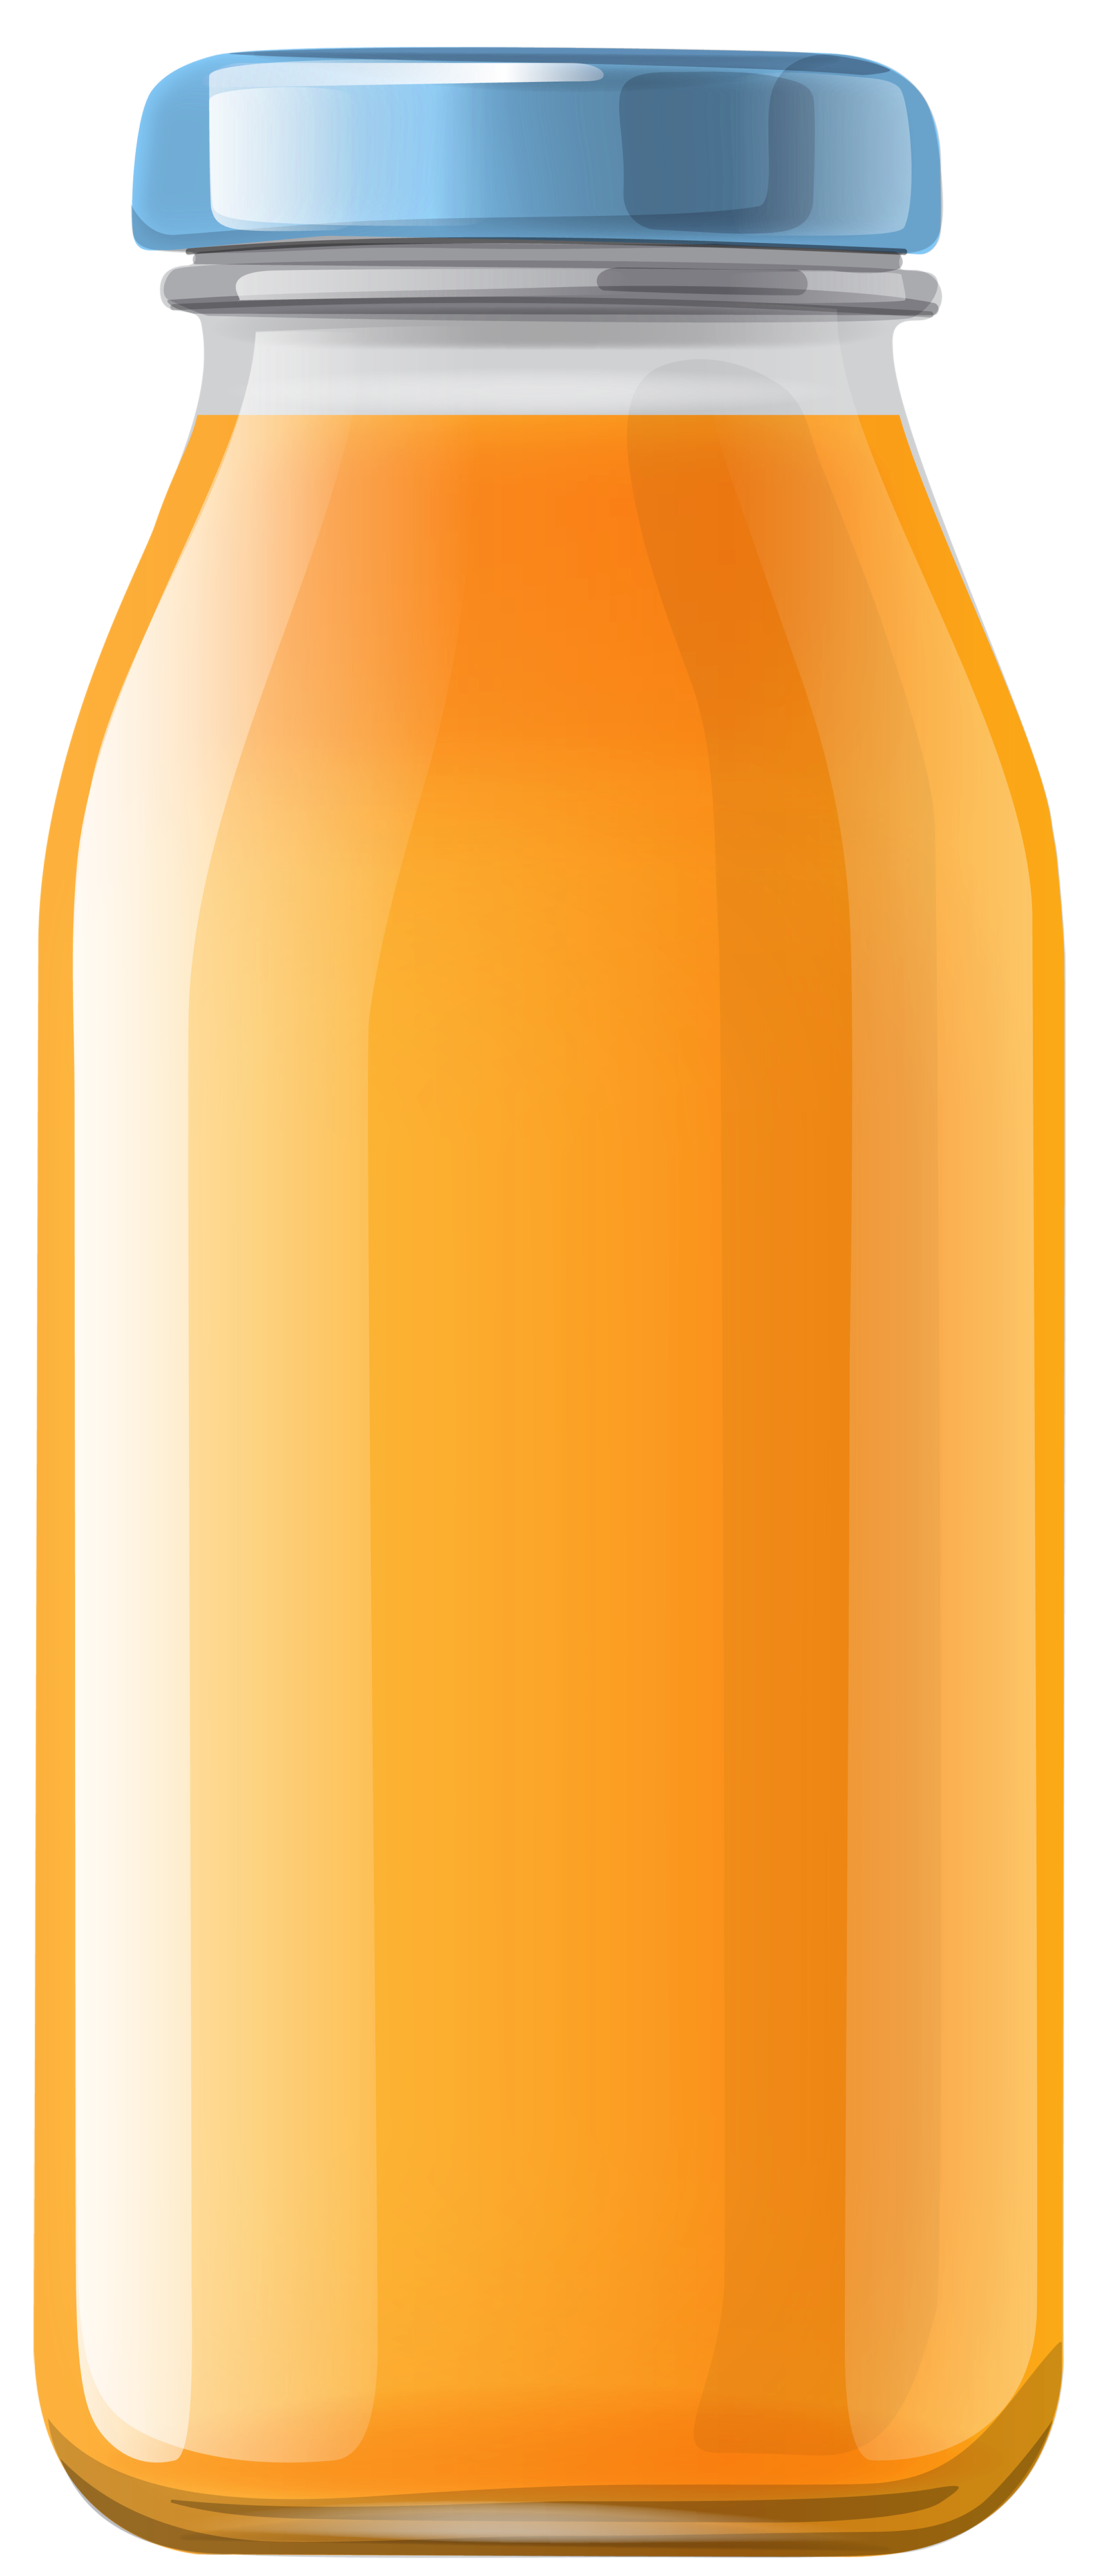 Orange juice bottle clipart 